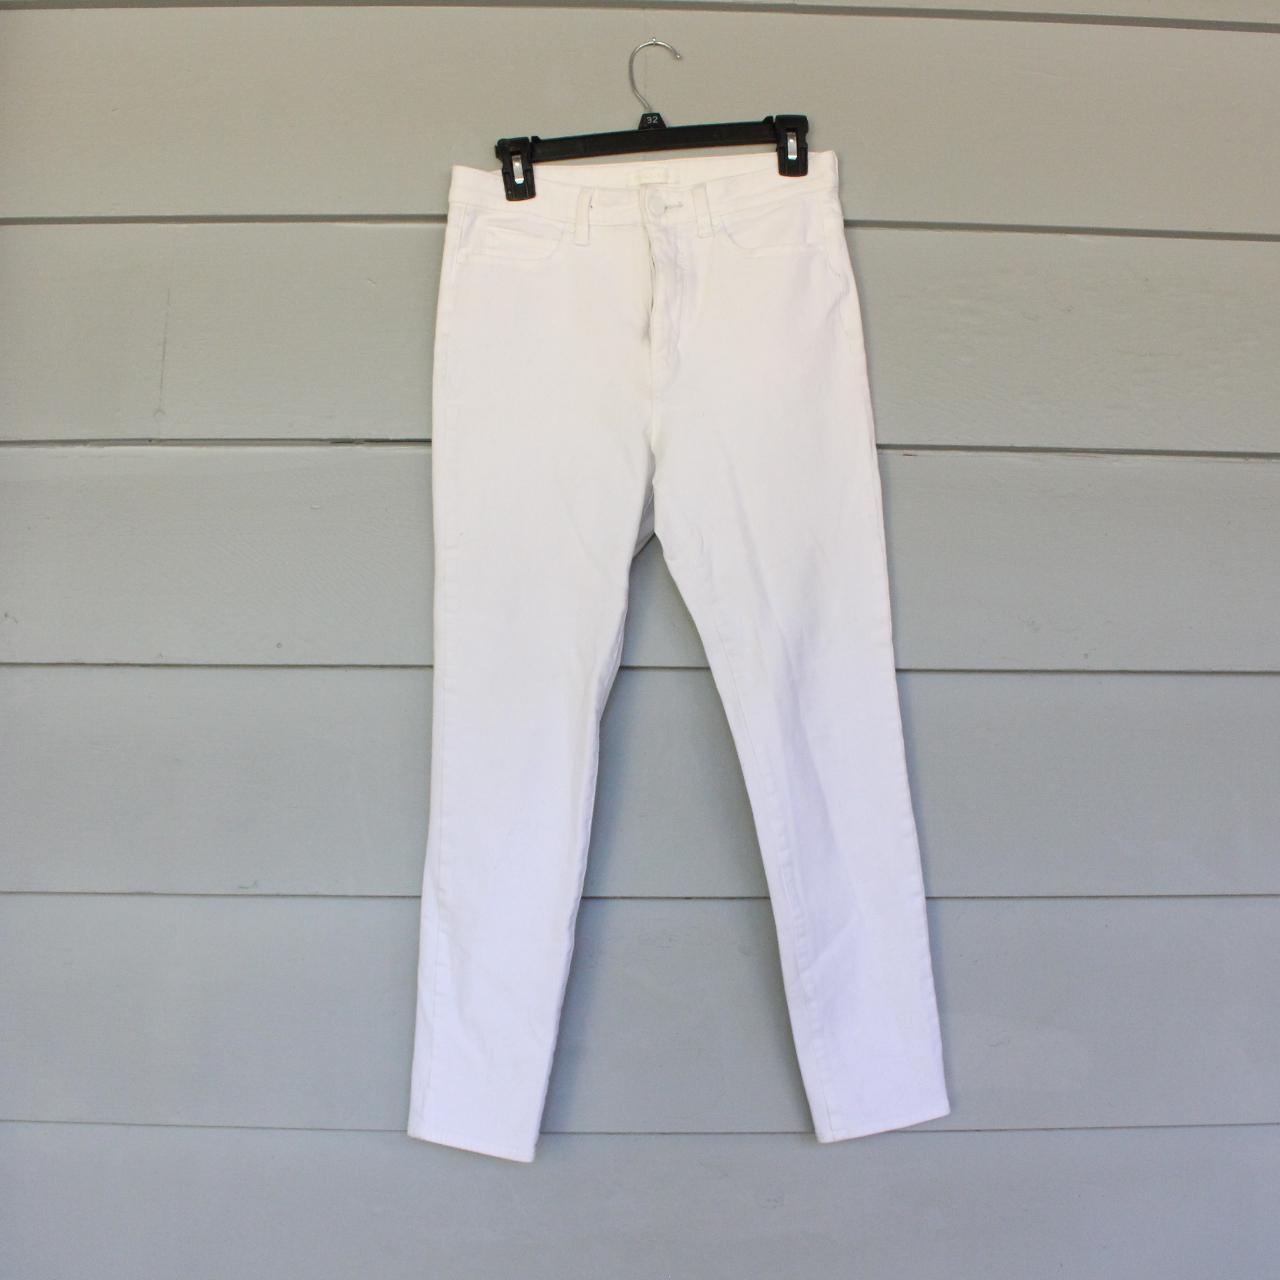 UNIQLO Women's White Jeans | Depop